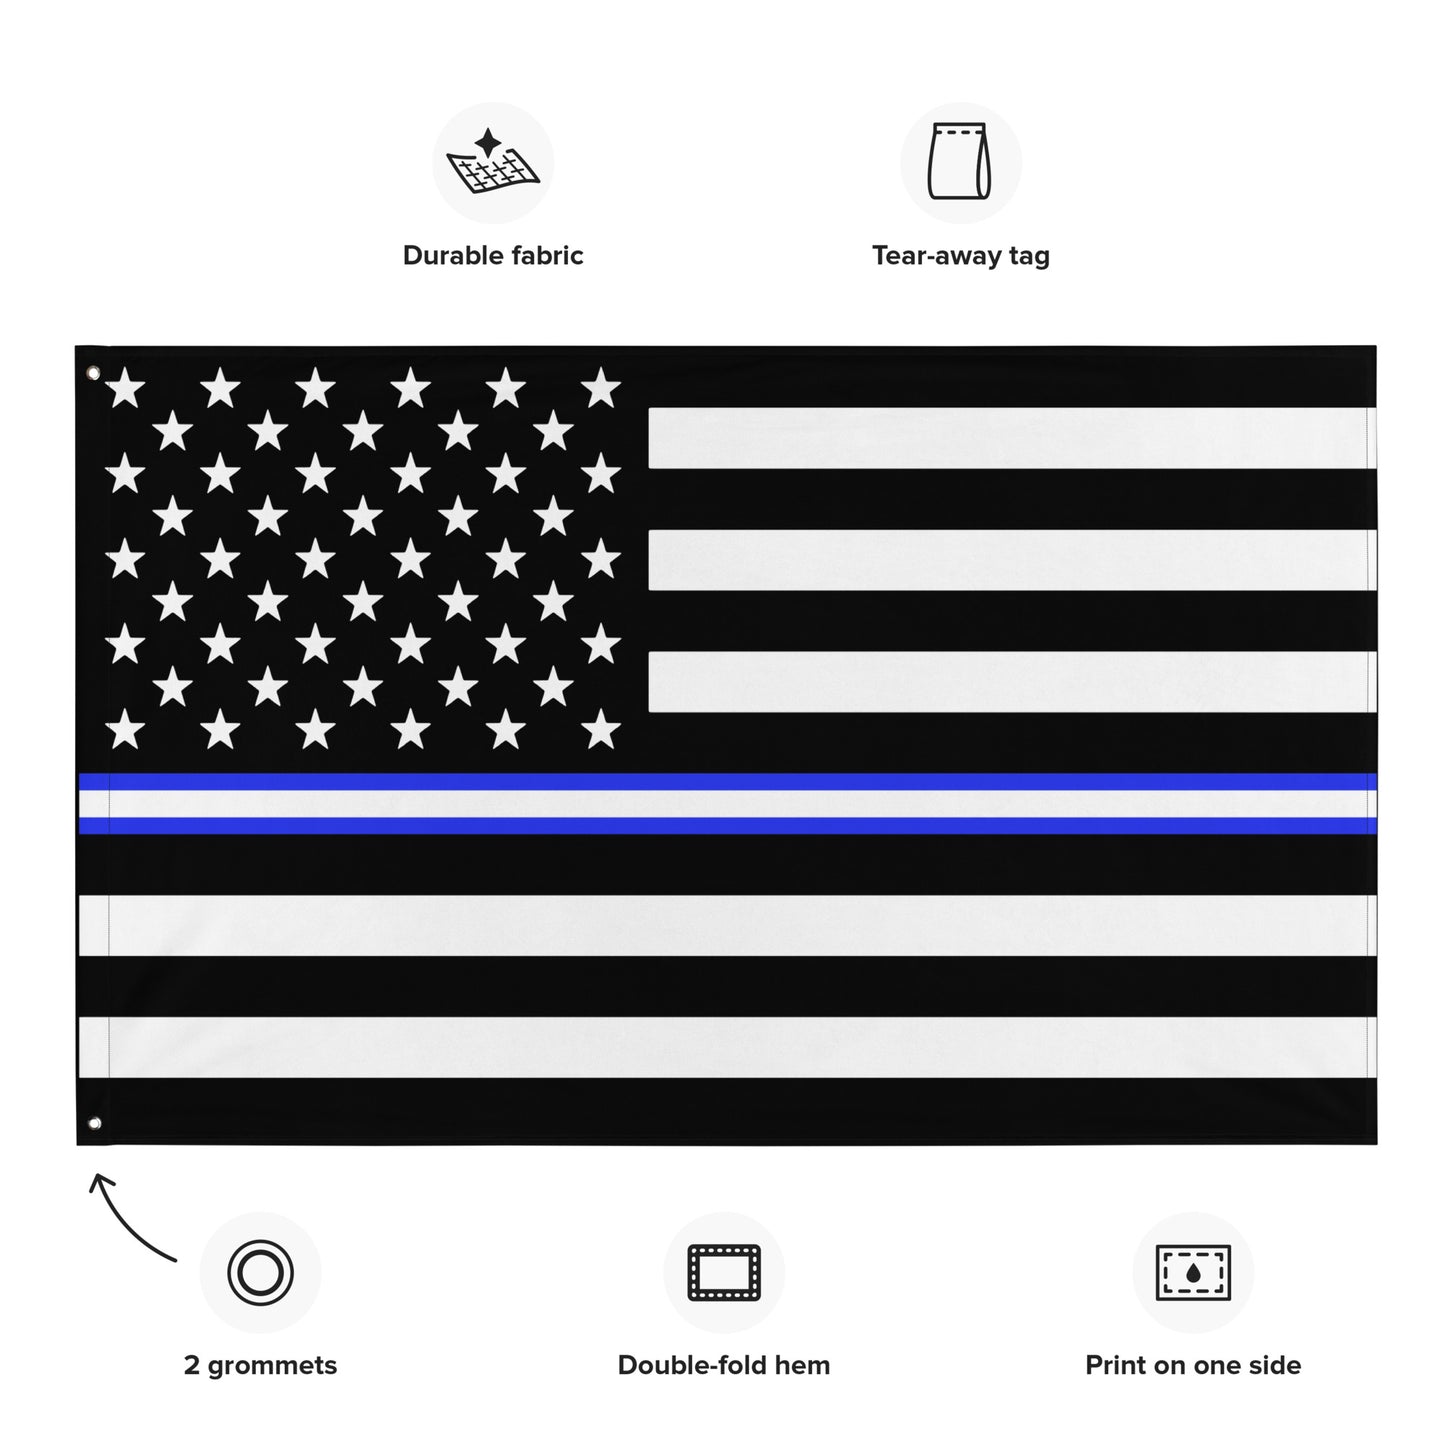 USA Thin Blue & White EMS Wall Flag-911 Duty Gear USA-911 Duty Gear USA